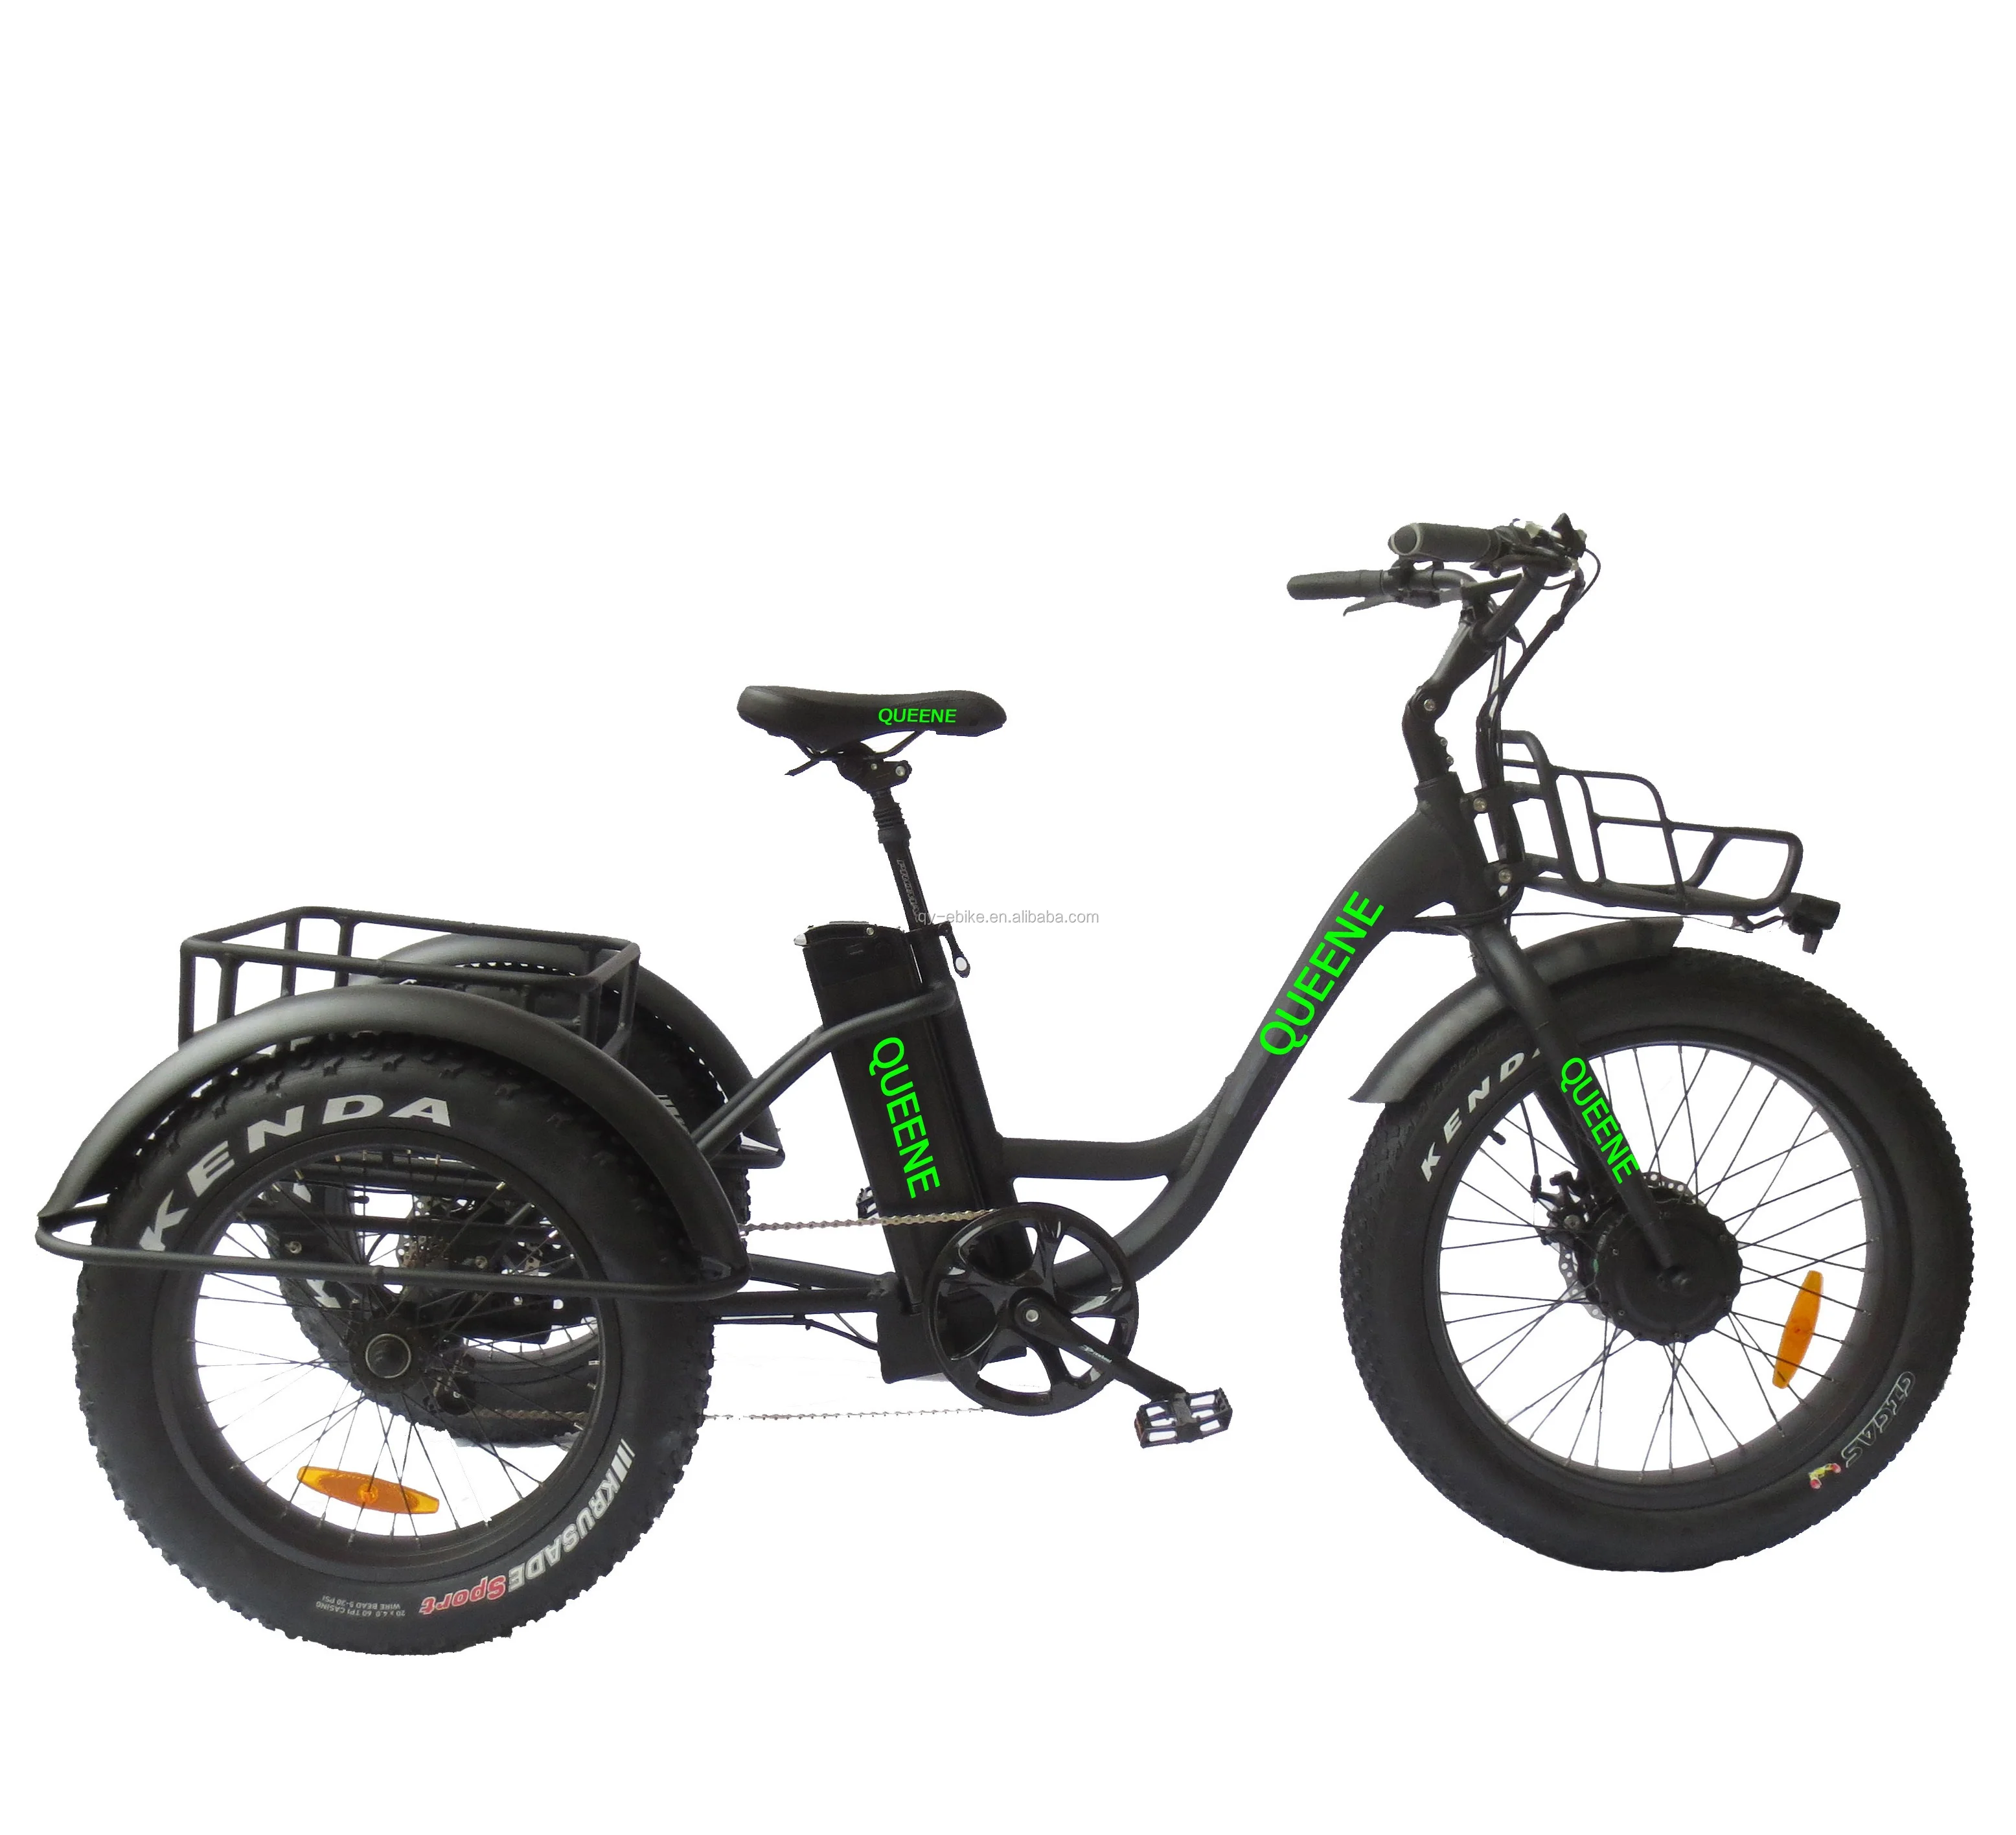 three wheel electric bicycle